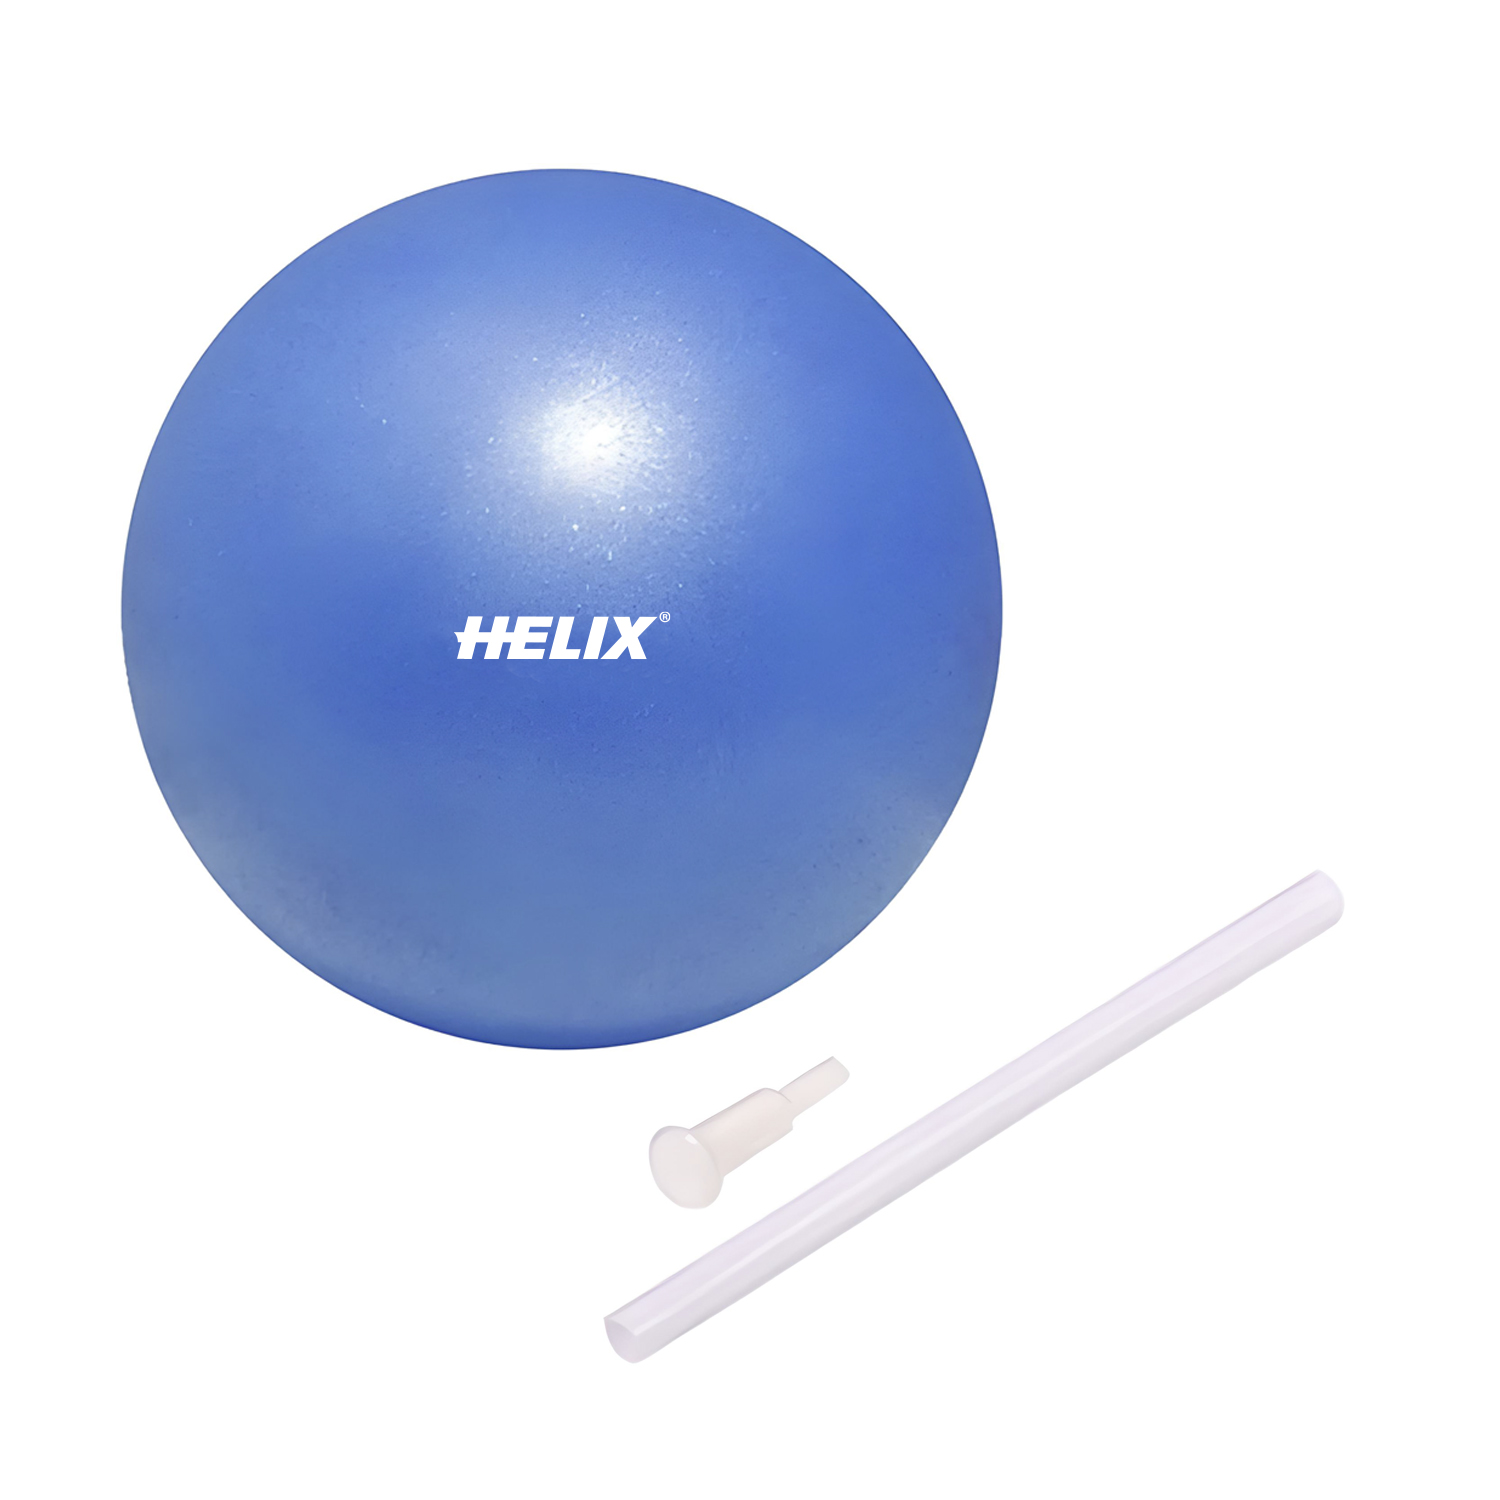 Helix 25 cm Pilates Ball - Blue